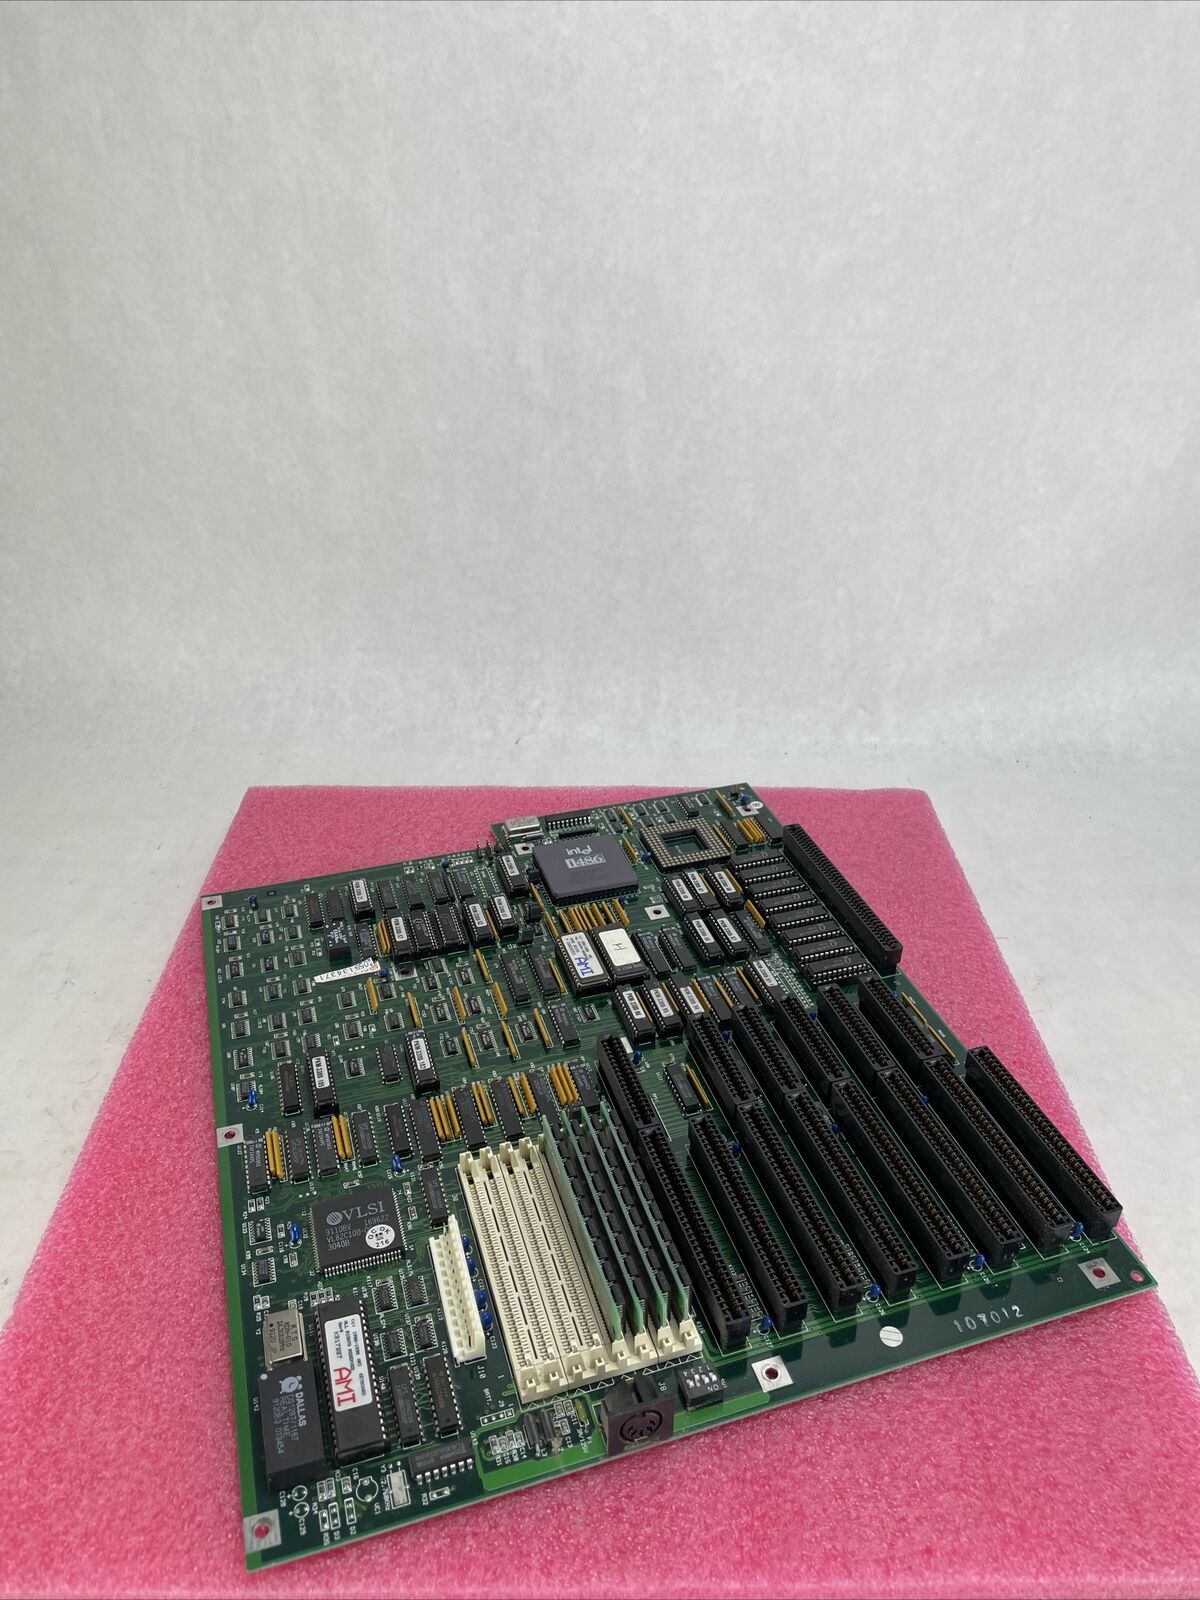 PKM-3300 Motherboard Intel 80486DX 33MHz 4MB RAM